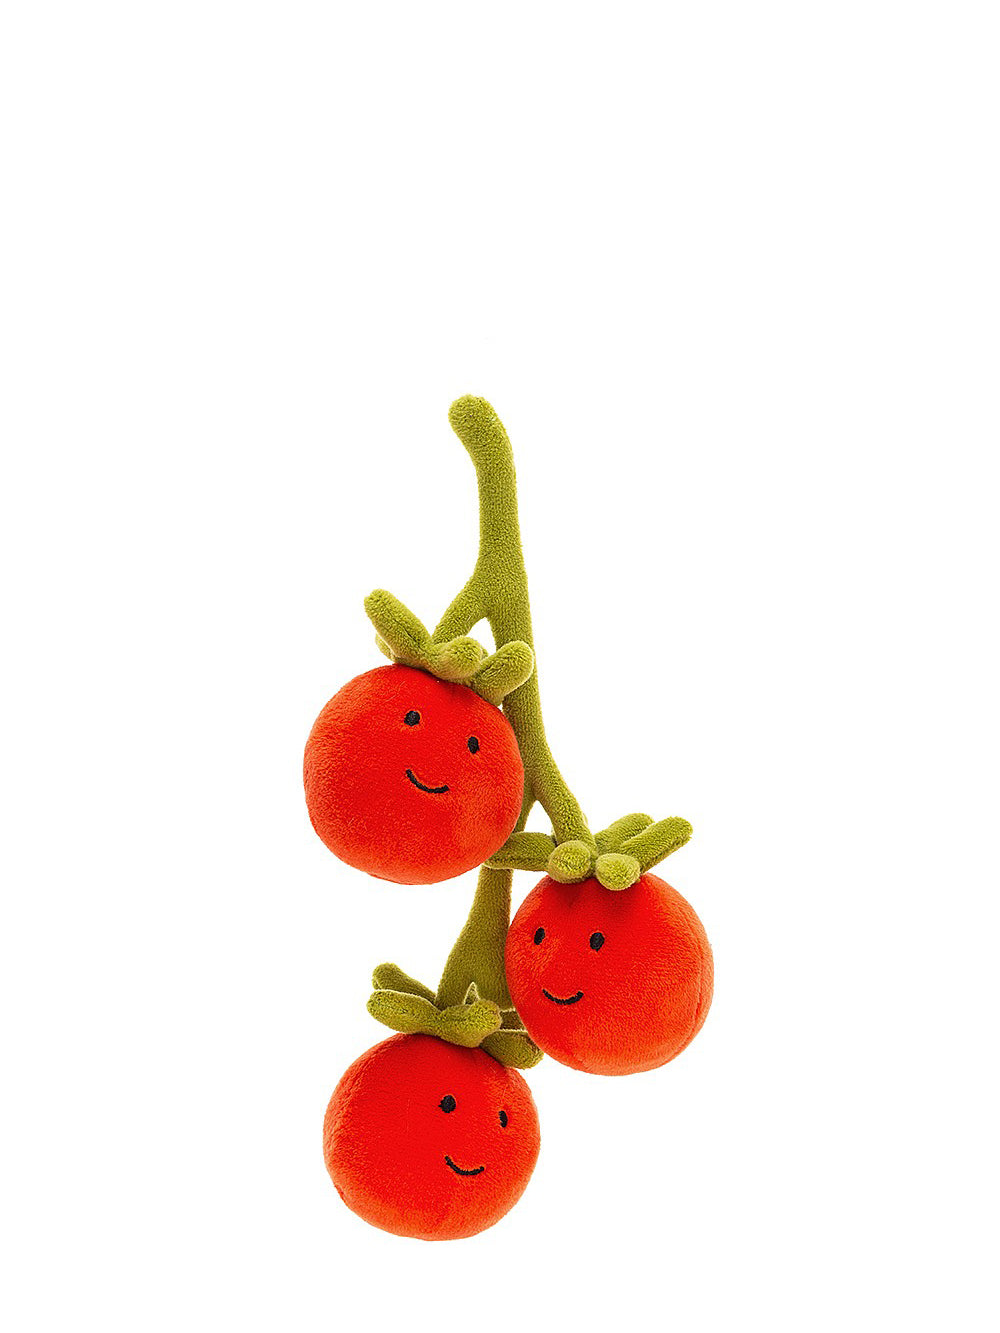 Vivacious Vegetable Tomatoes